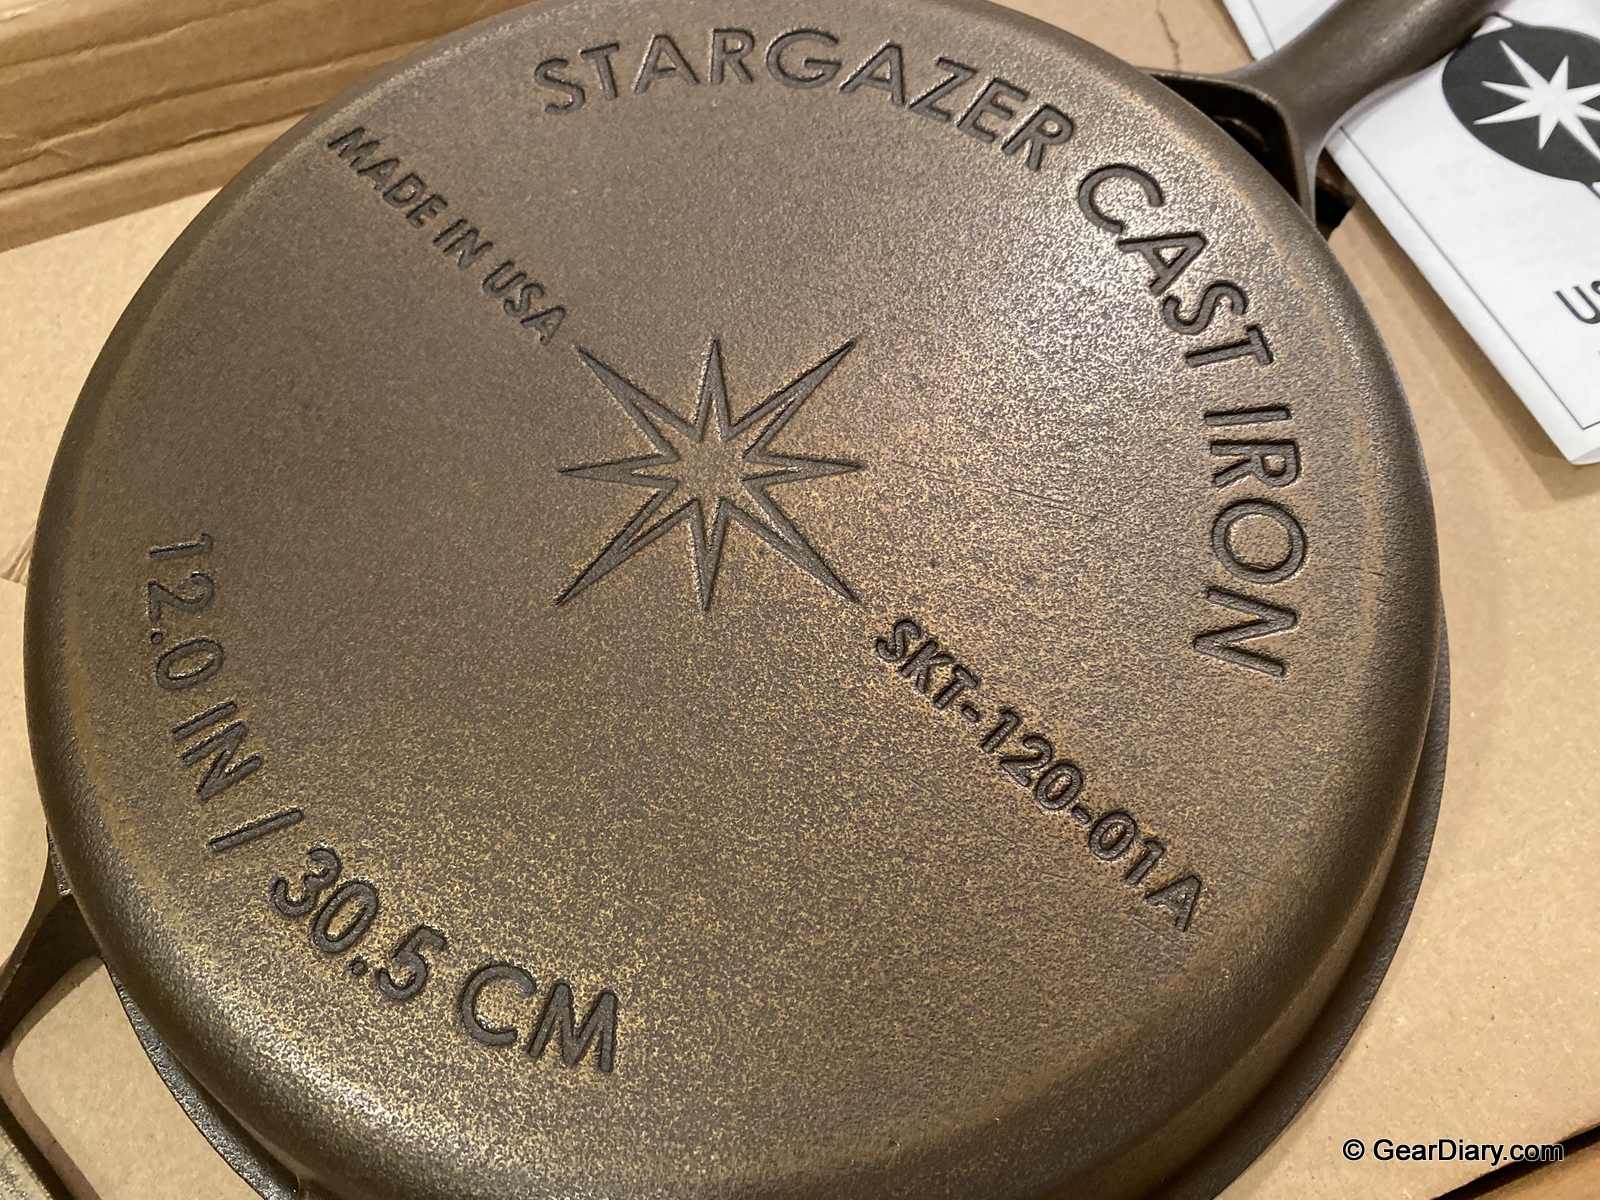 Stargazer Cast Iron Skillets Impress Fusing Innovative Design and